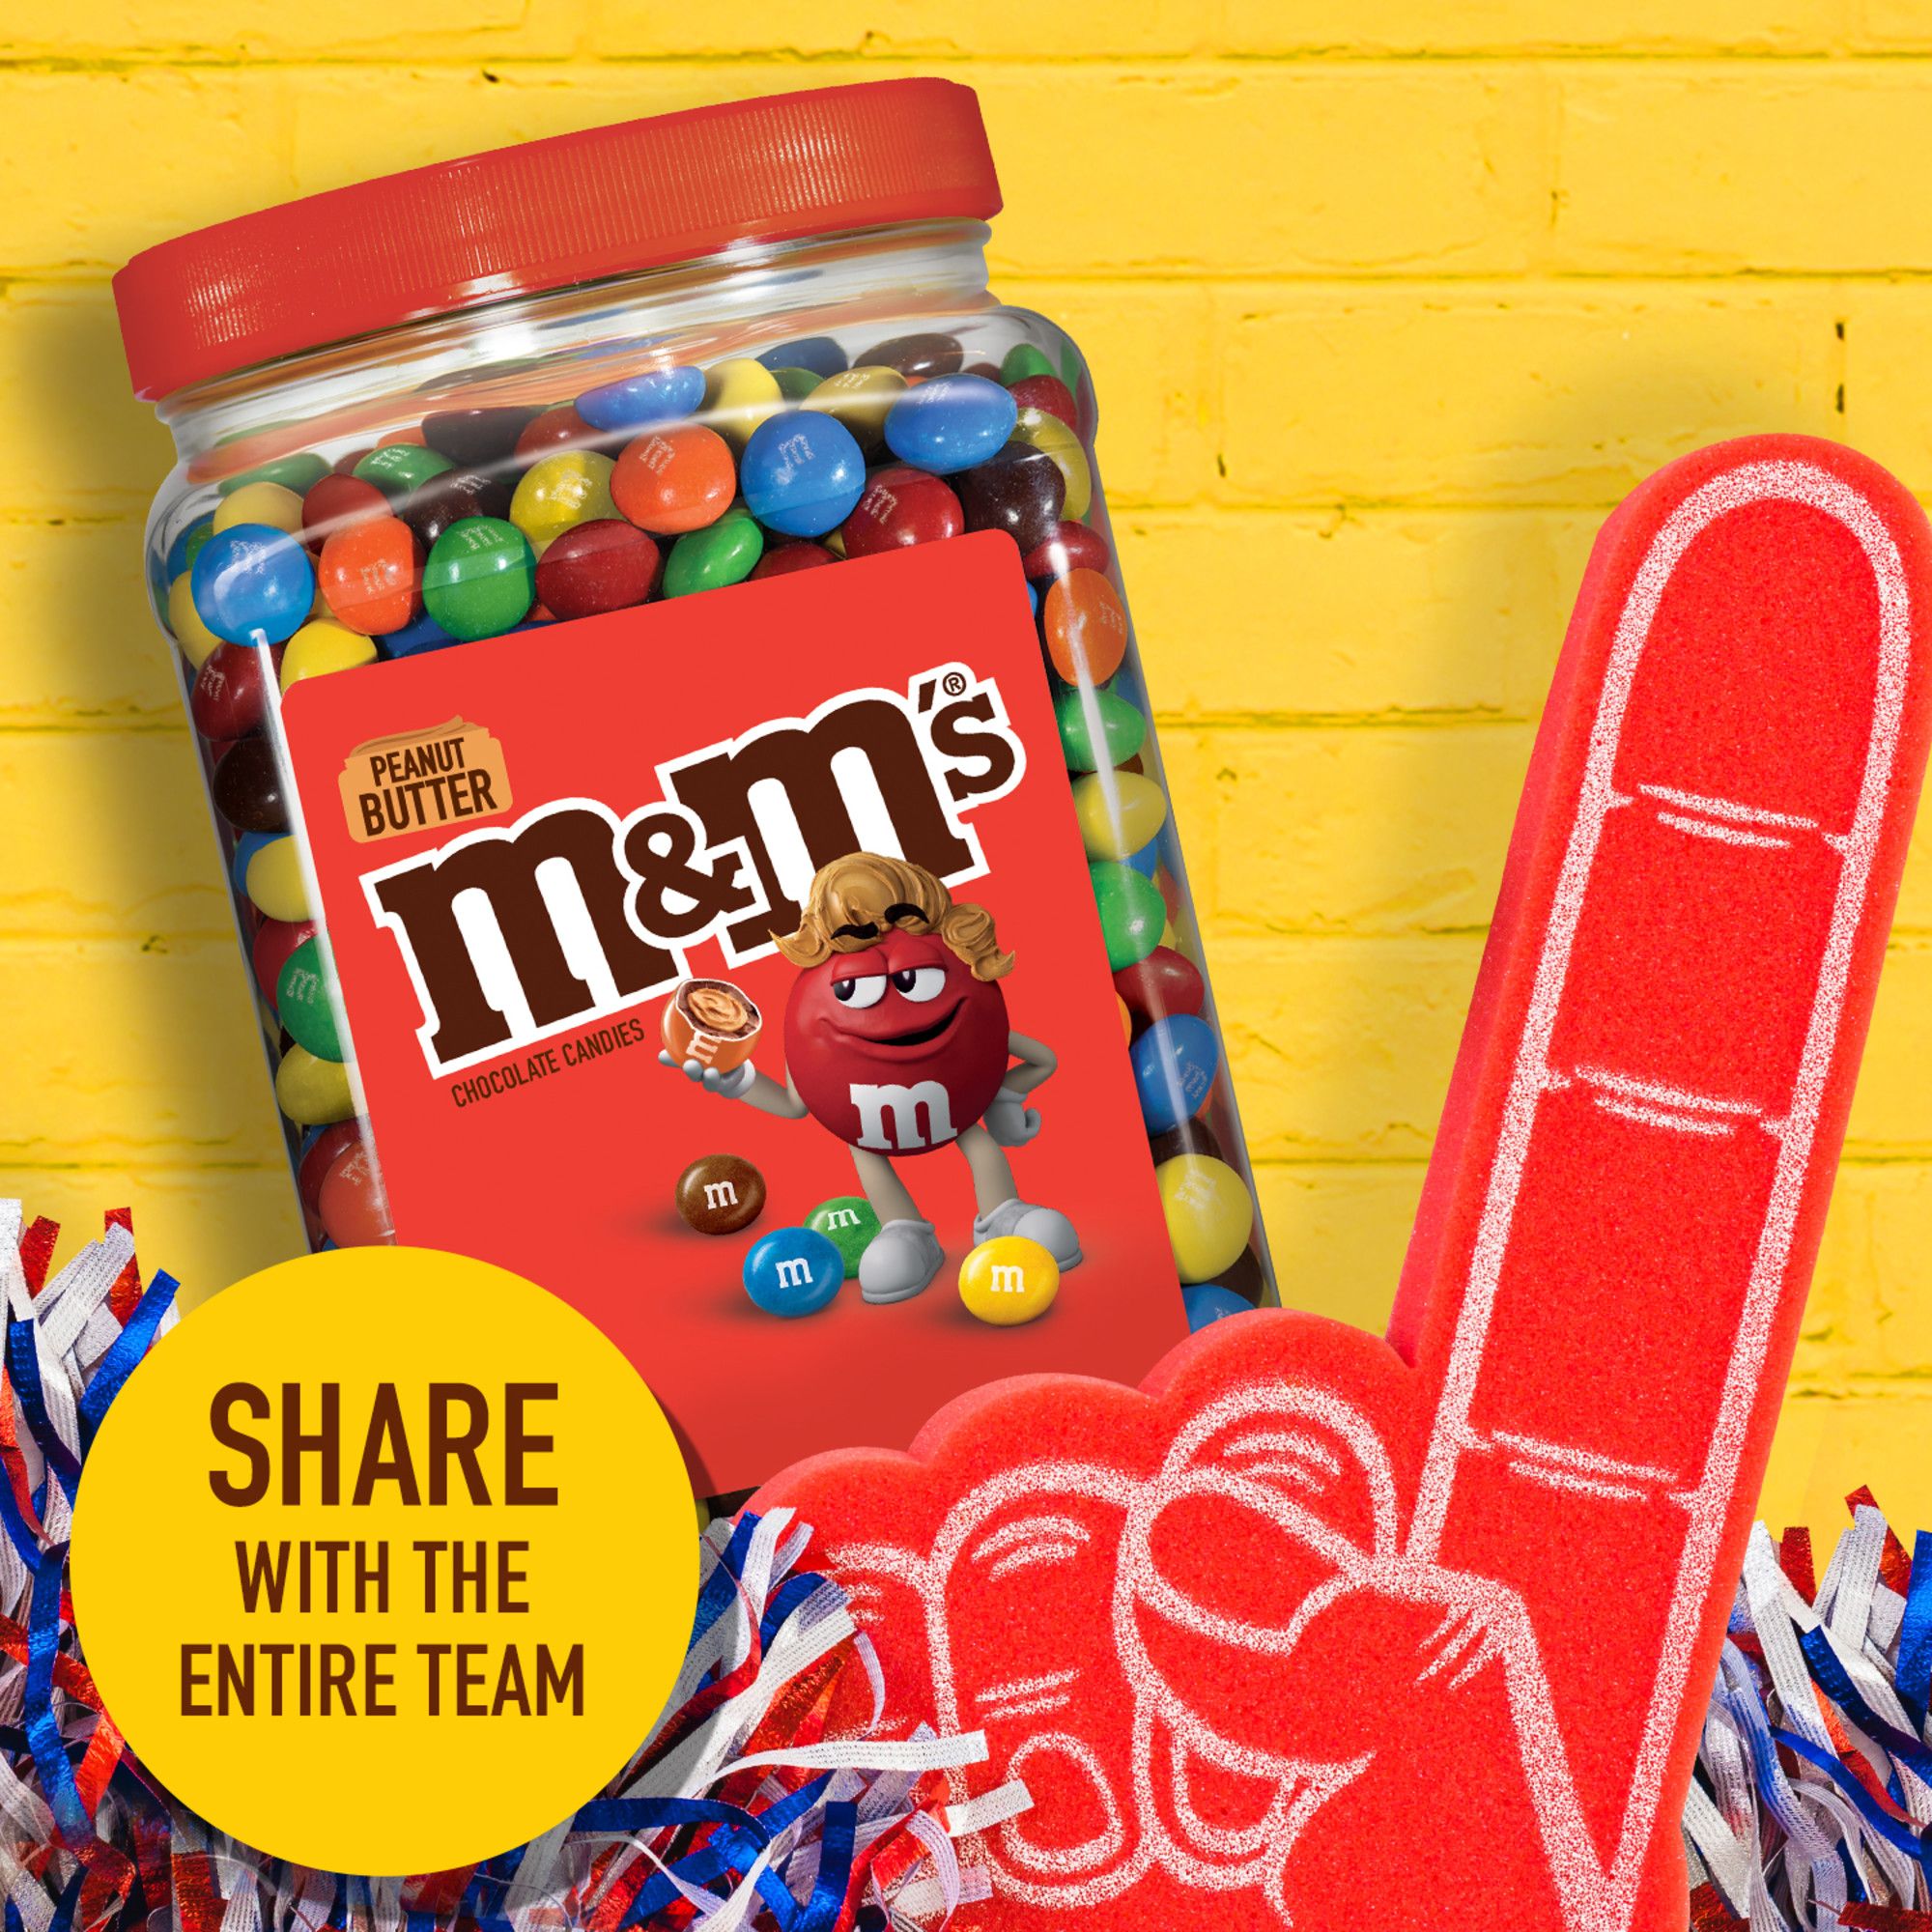 M&M's MandM's Milk Chocolate Peanut Candies Jar, 62 oz in the Snacks & Candy  department at